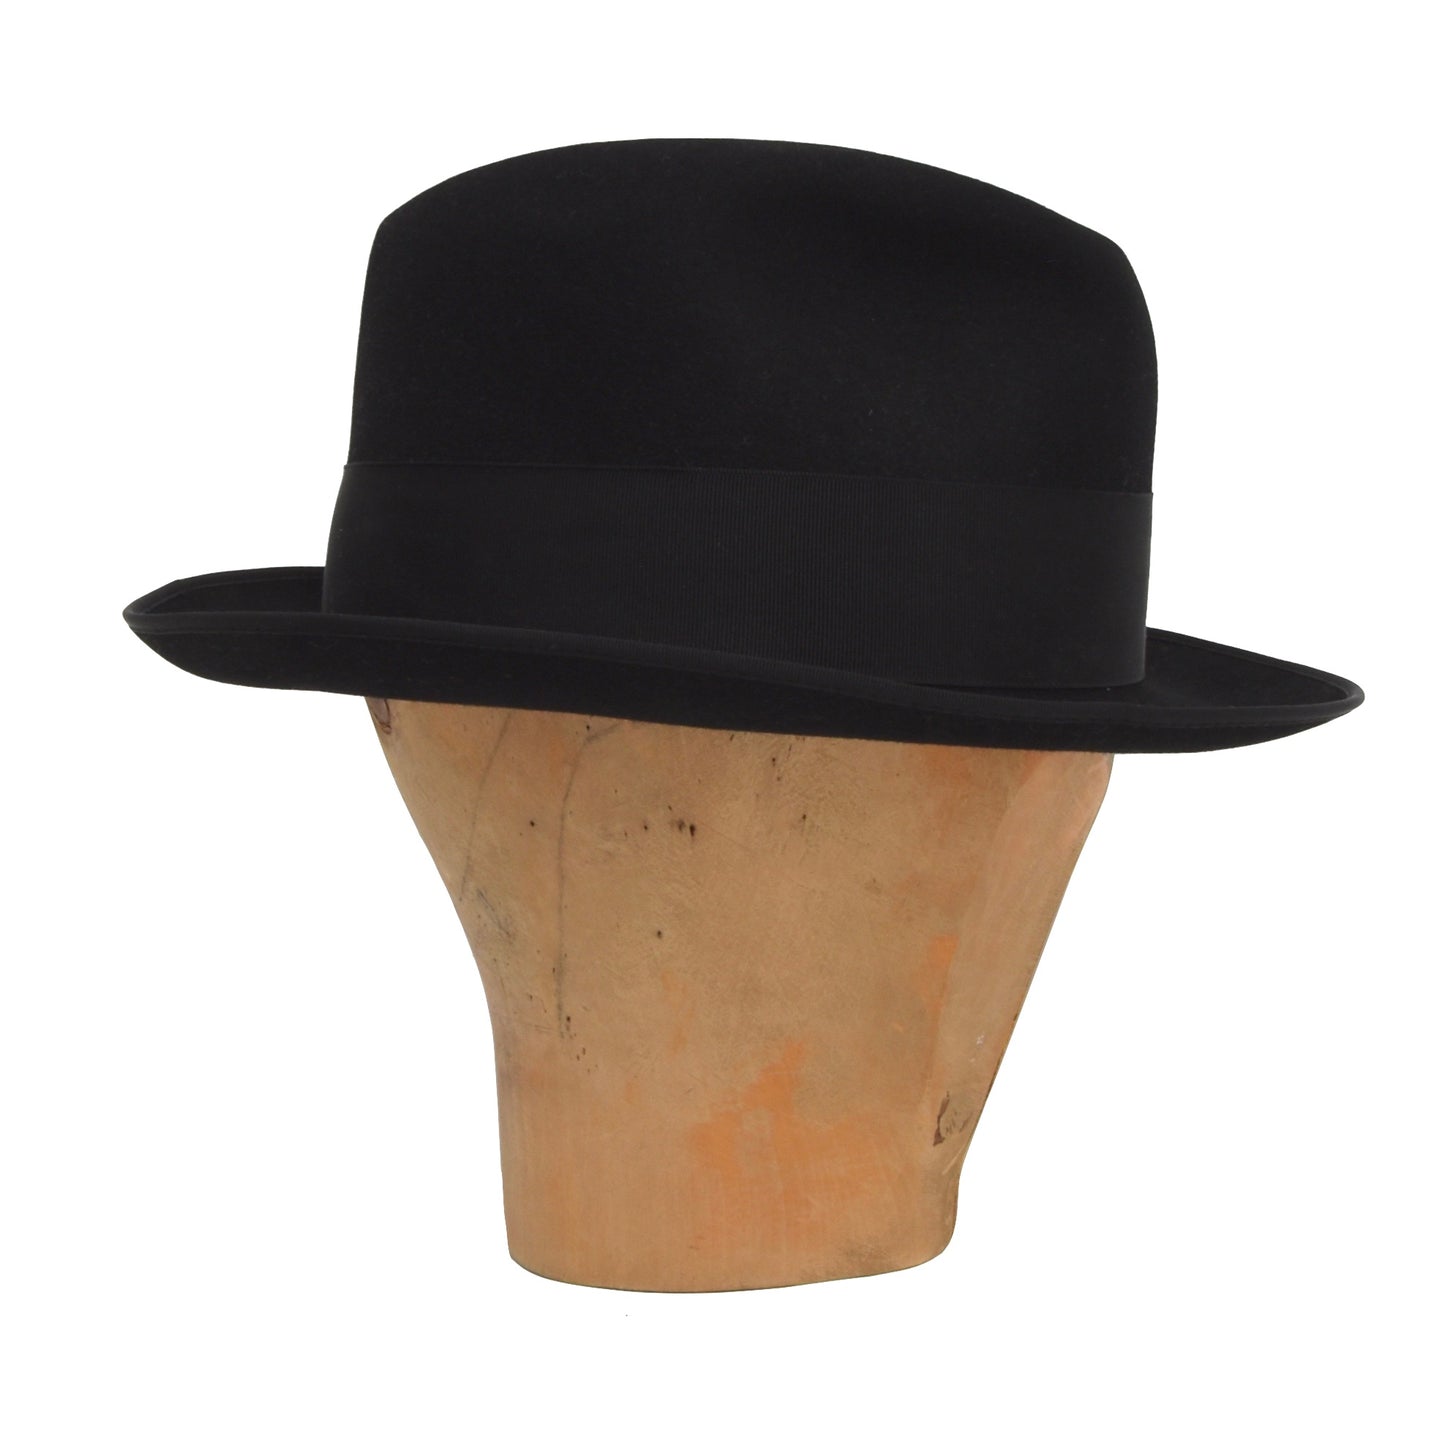 Peschel Fur Felt Hat Size 56 - Black